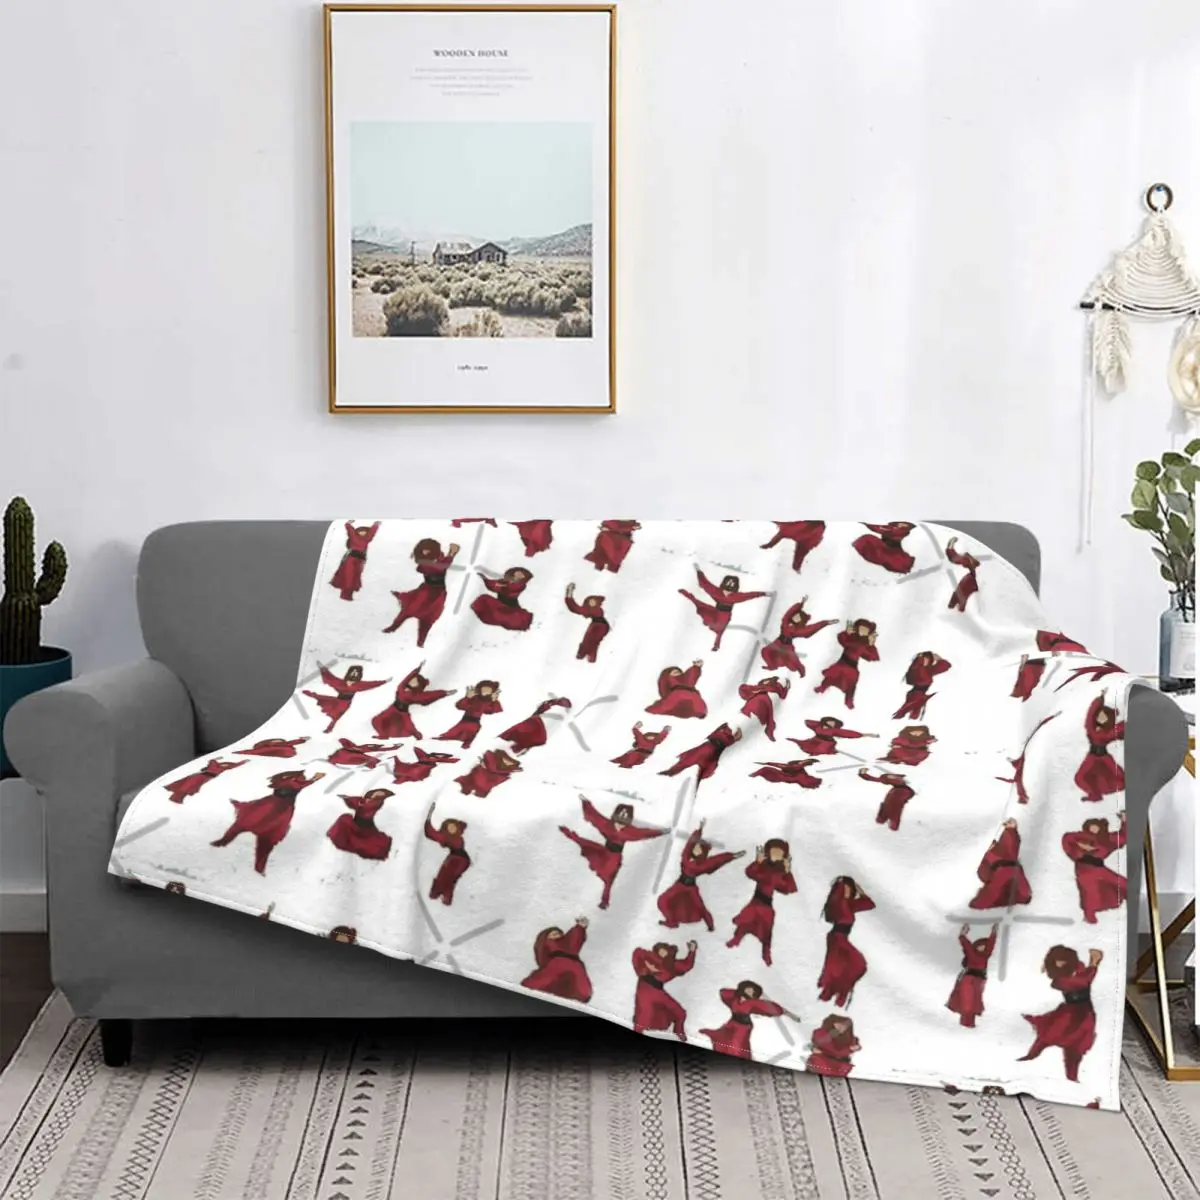 

Одеяло Kate -Wuthering V2, покрывало для кровати, плед, диван, покрывала, толстовка, одеяло, пляжное полотенце, роскошное